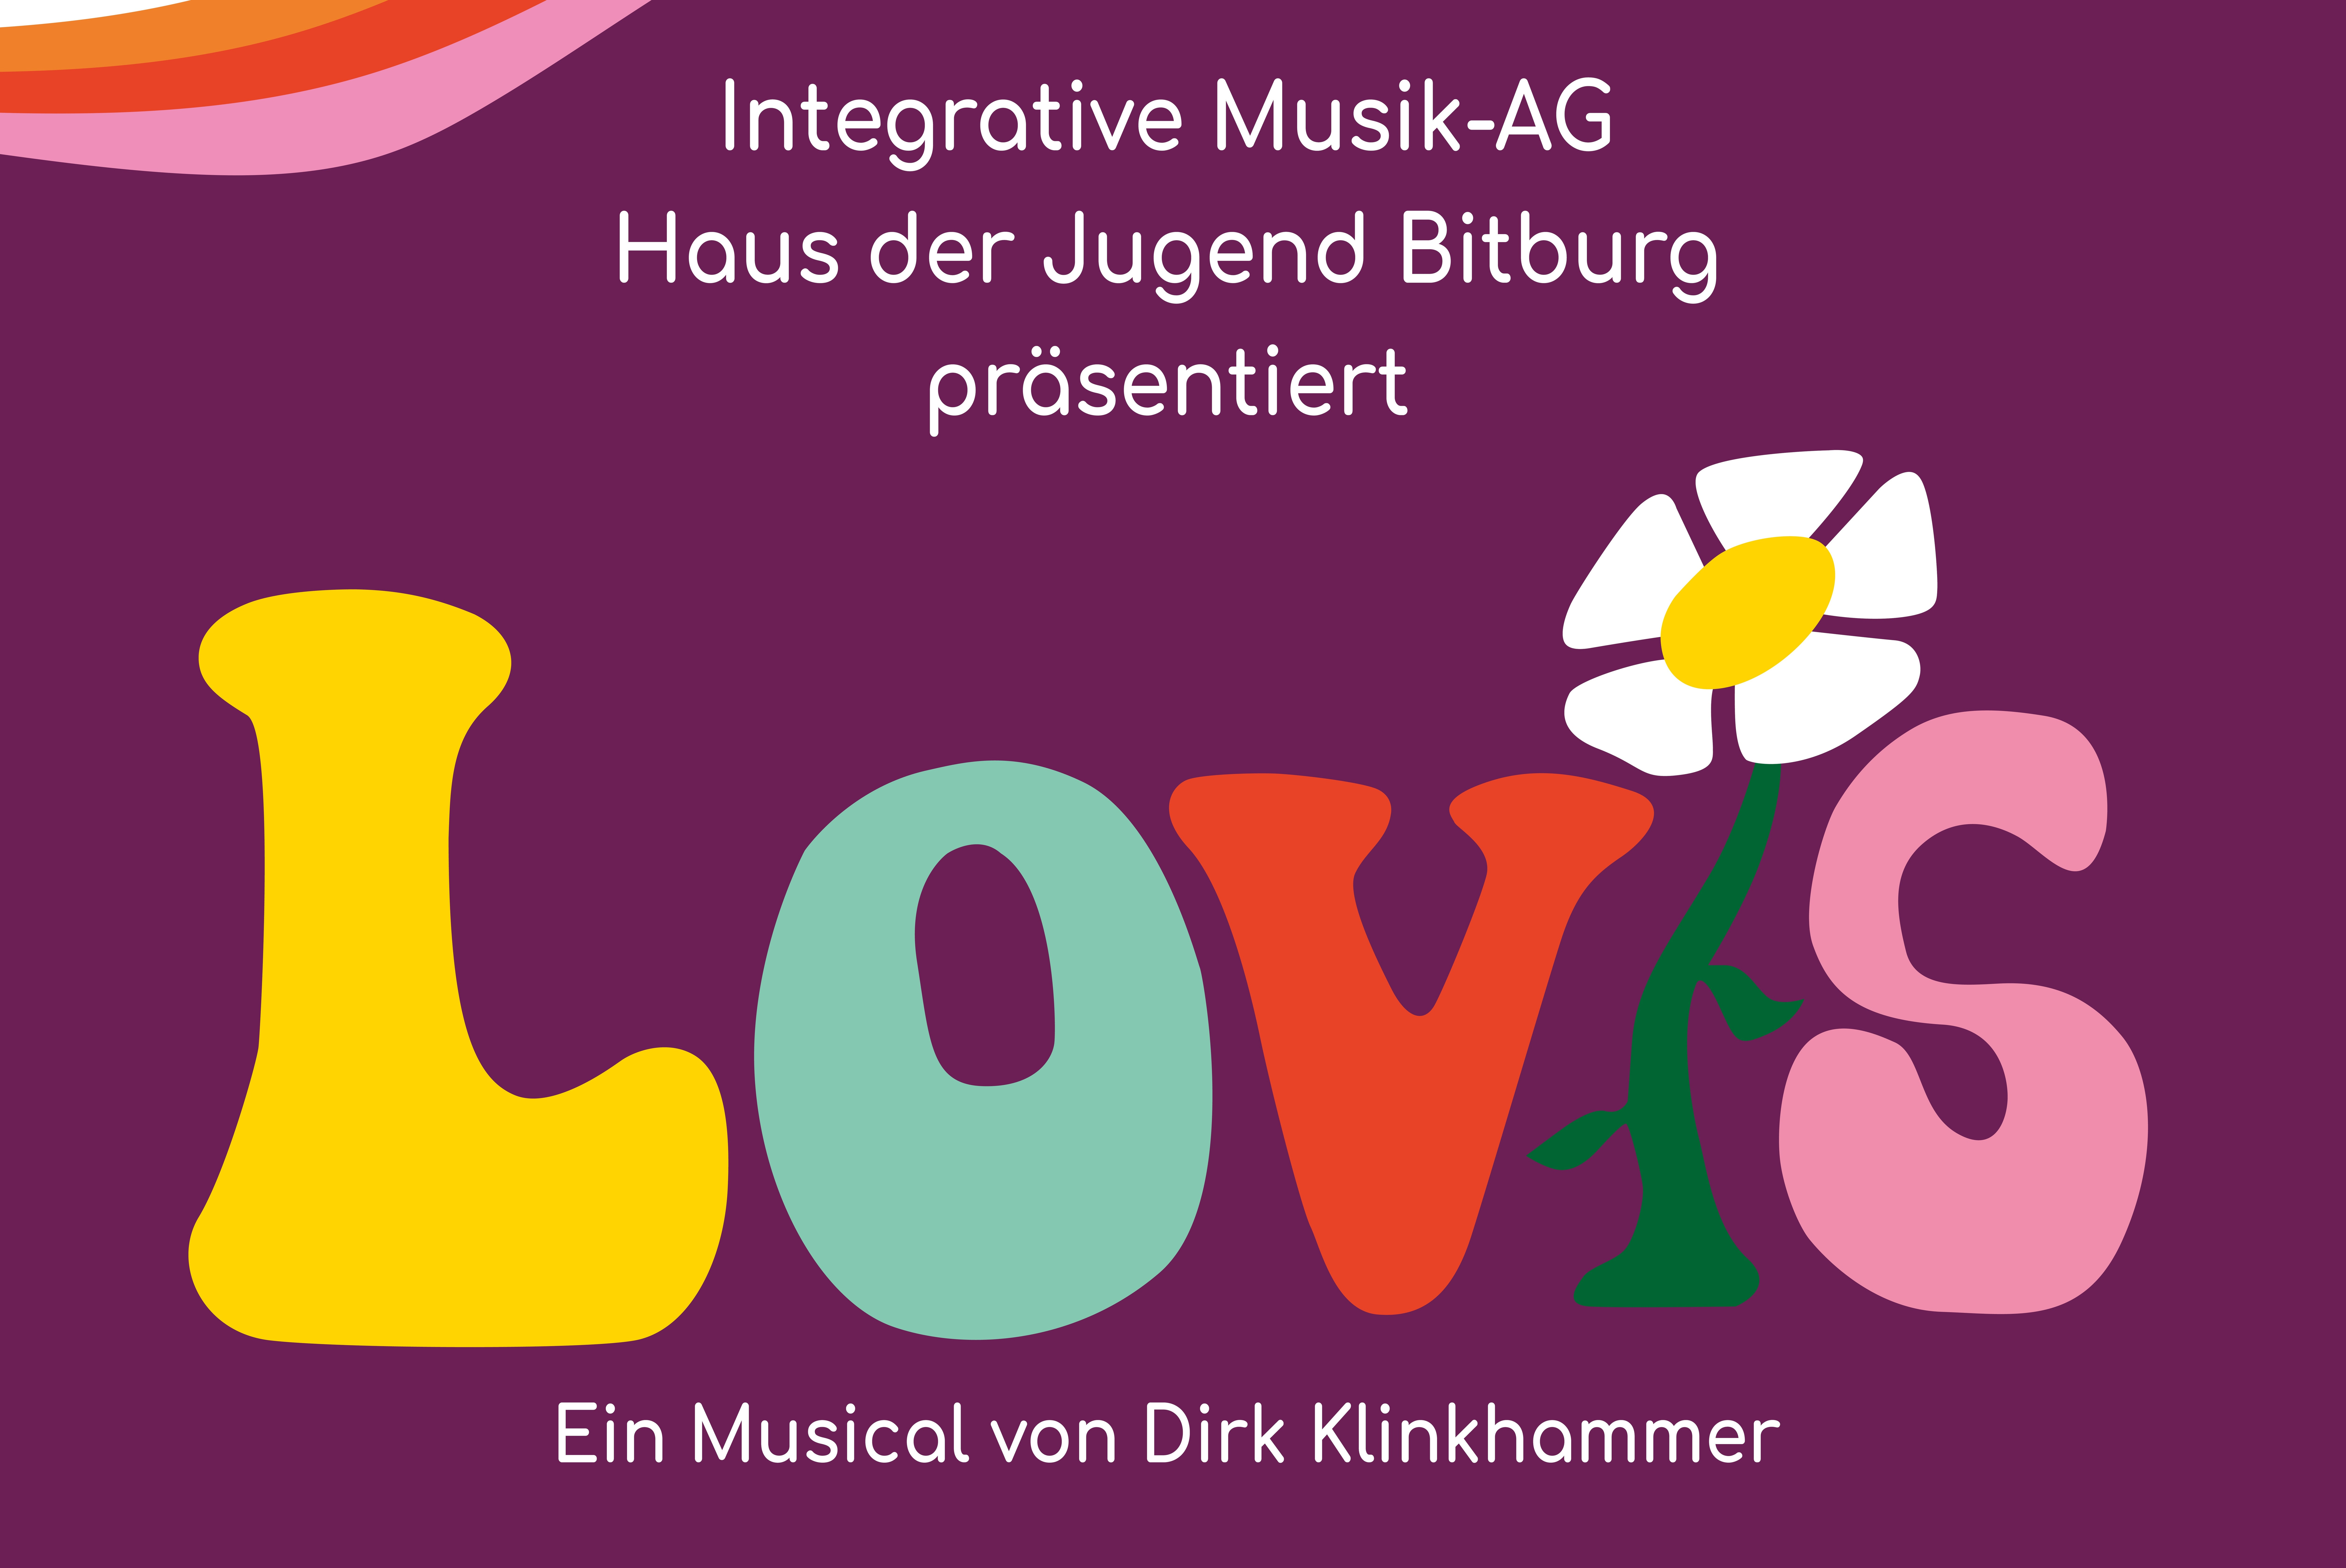 LOVIS- Ein Musical der Integrativen Musik AG presale information on freepresalepasswords.com